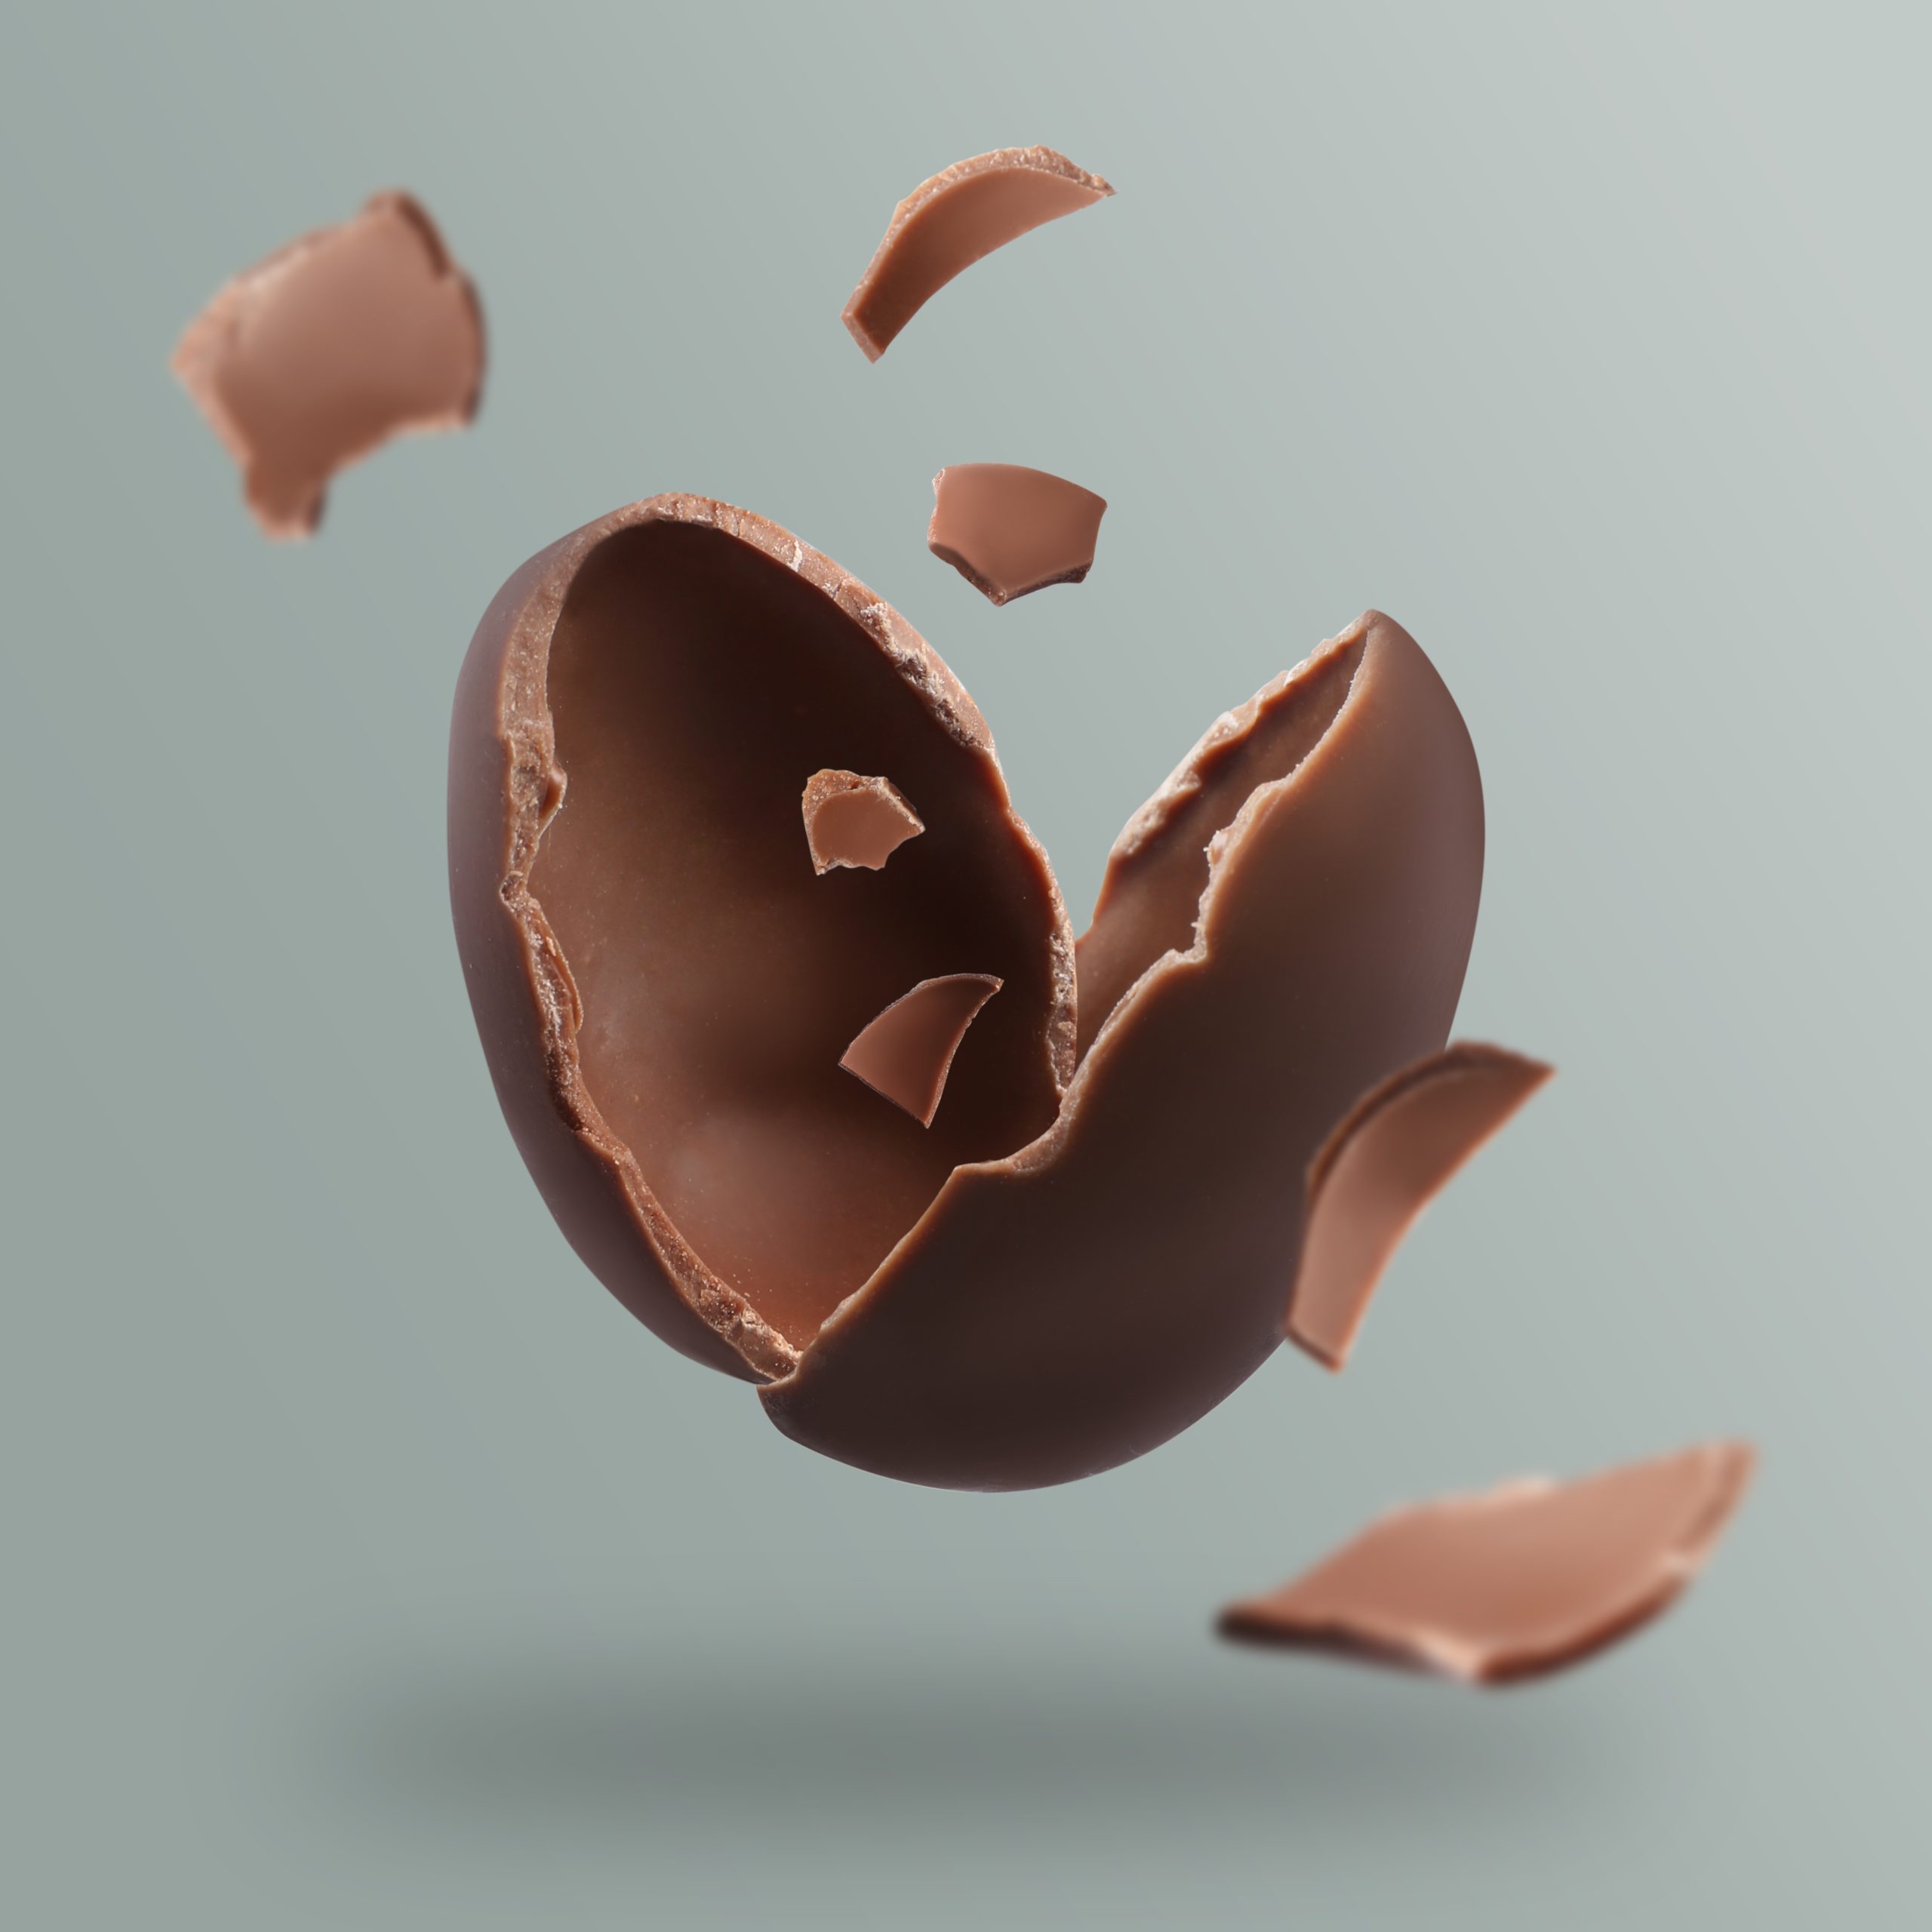 Oeufs Chocolat - K.Pultau